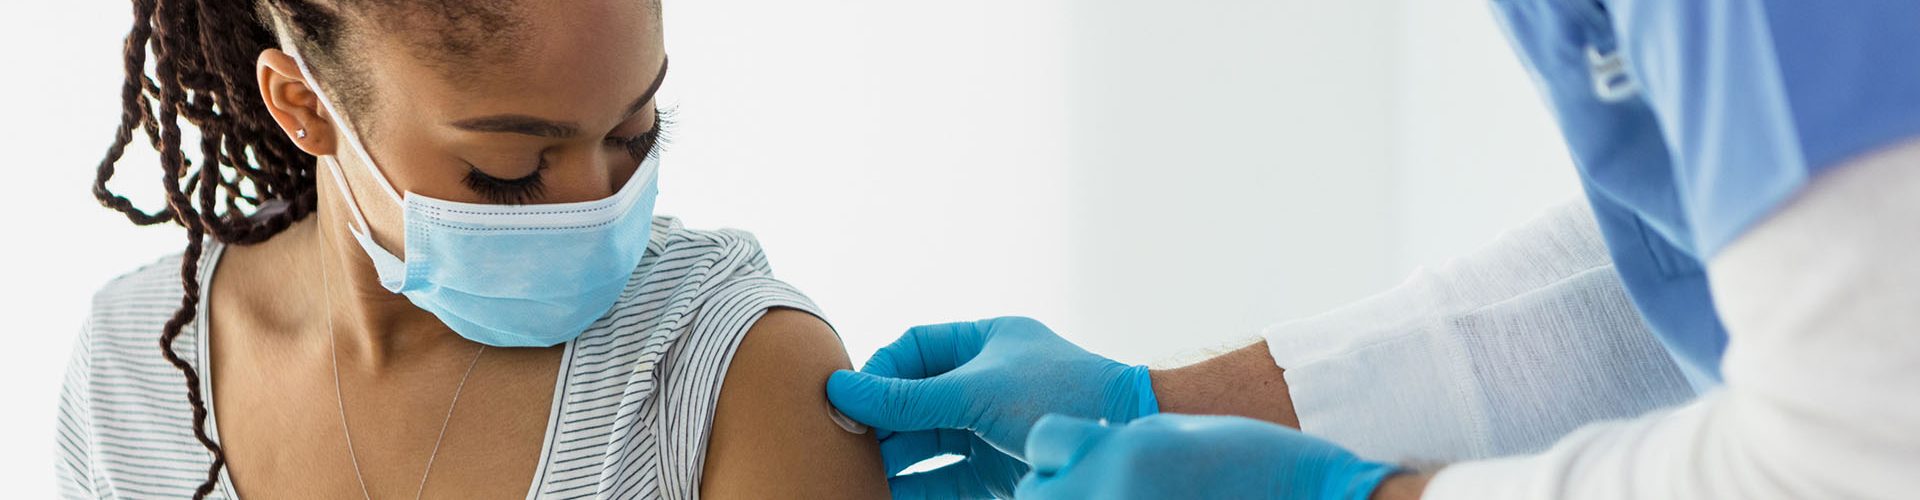 Woman looks down as nurse applies adhesive bandage